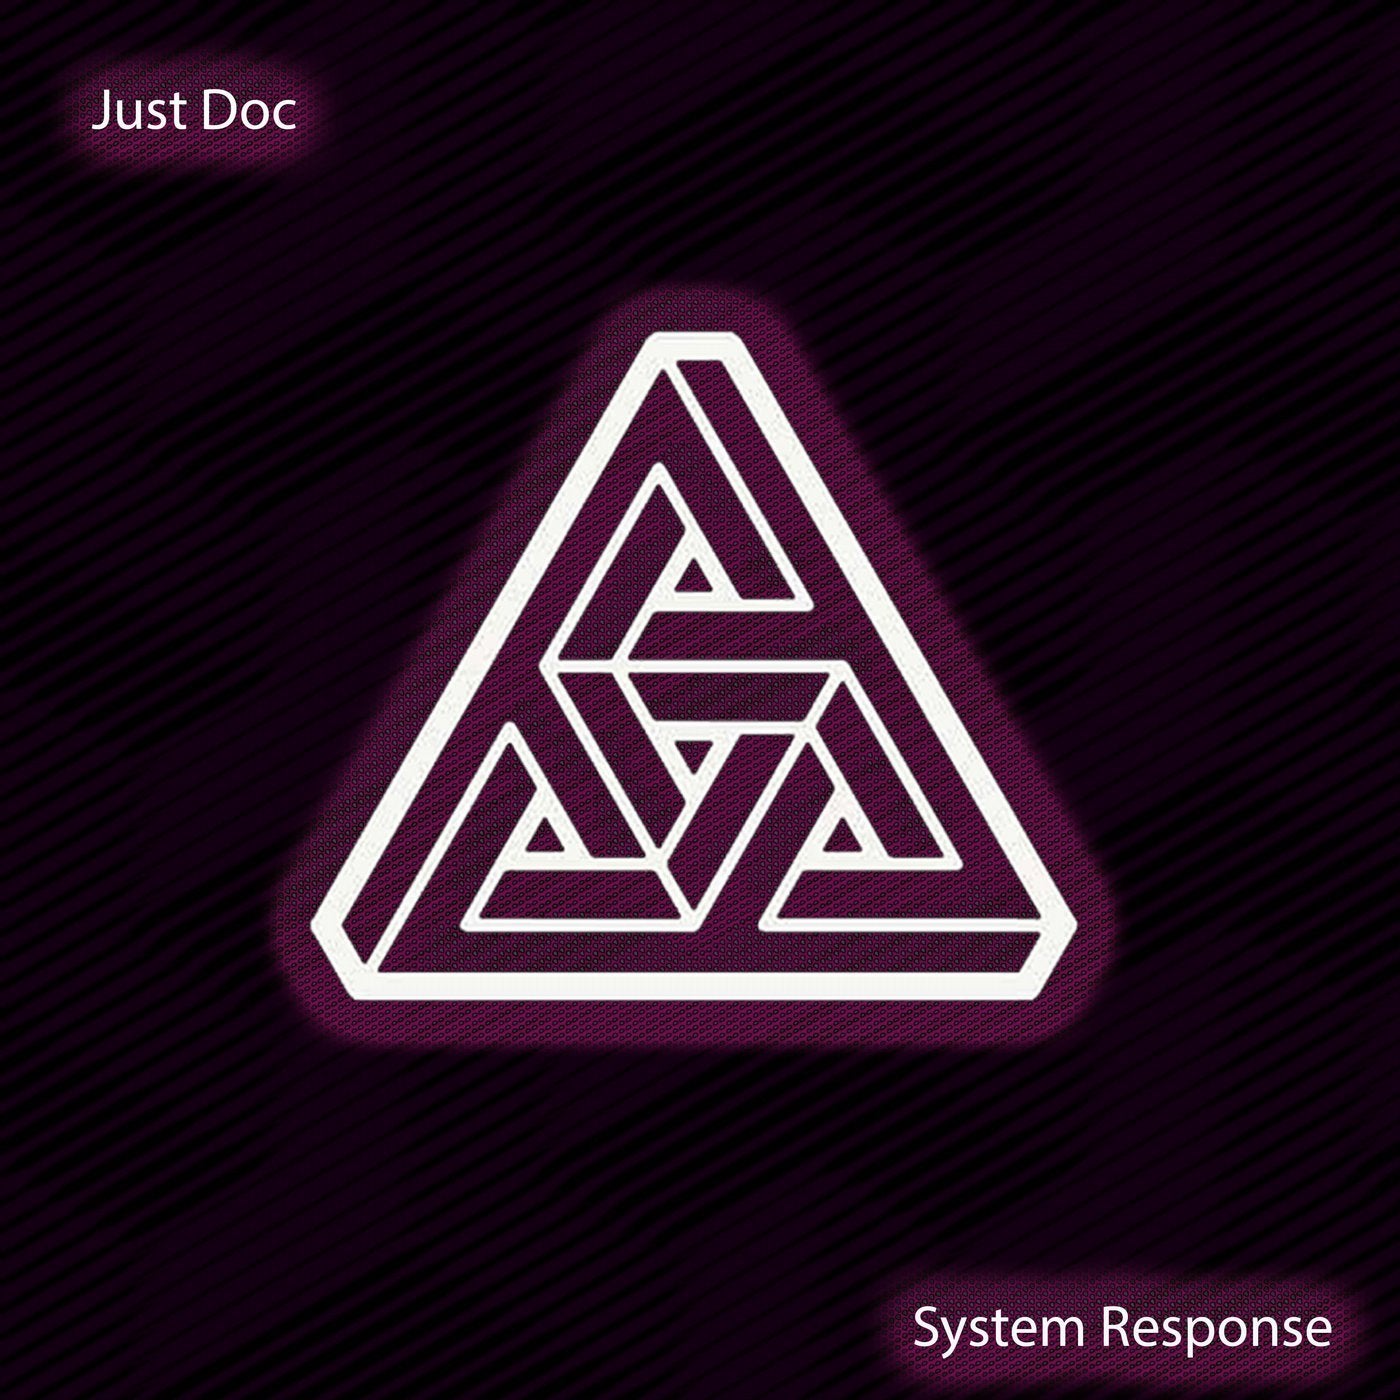 System Response